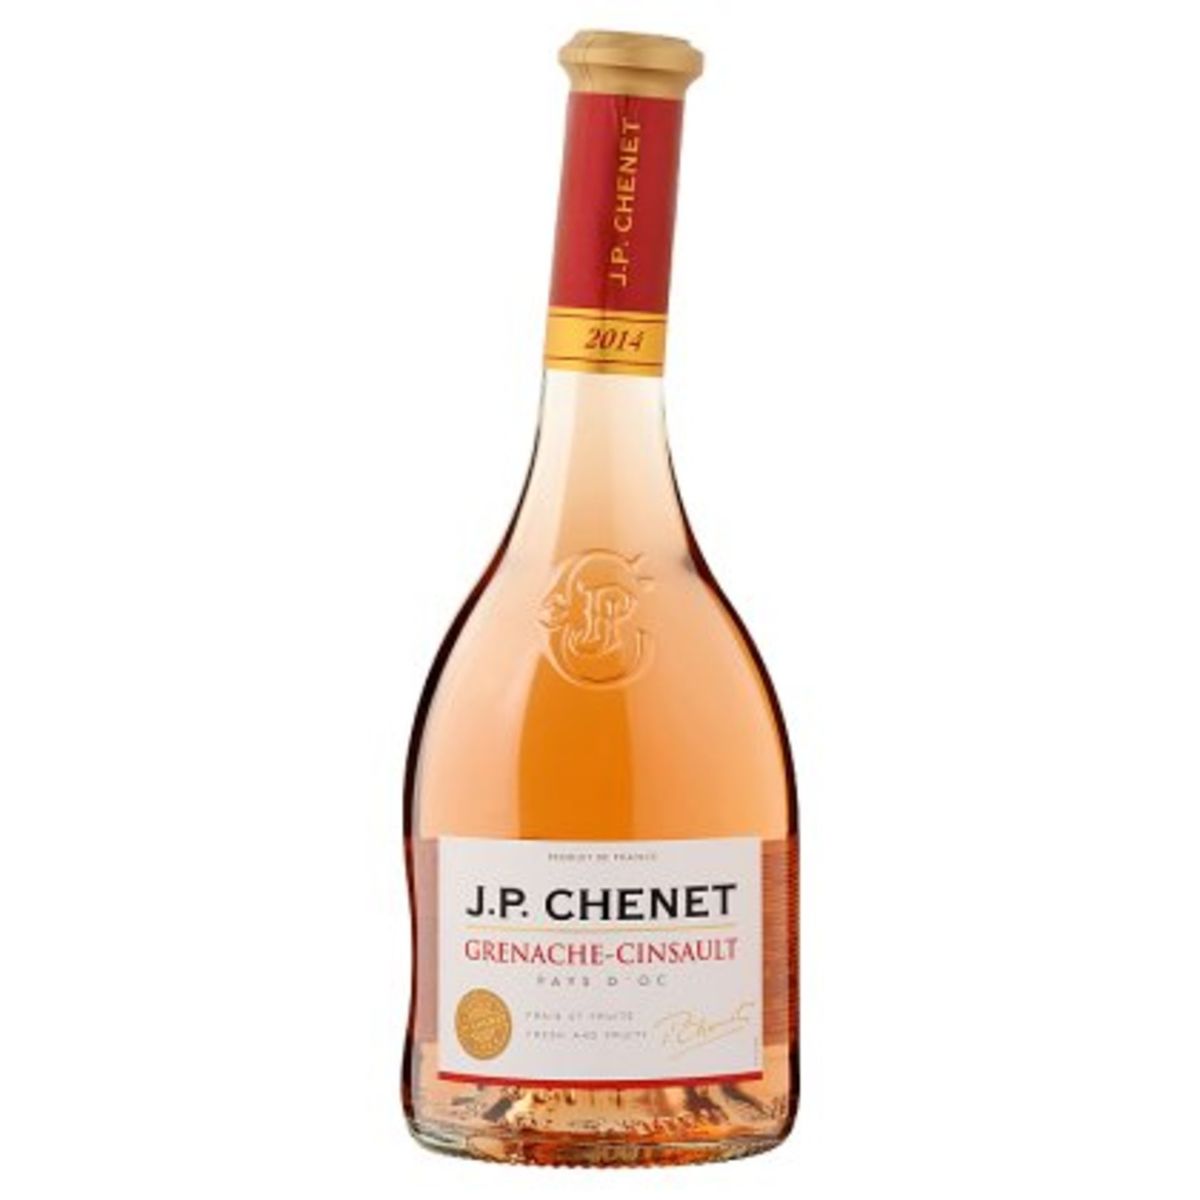 J. P. Chenet Grenache-Cinsault Pays d'Oc 750 ml